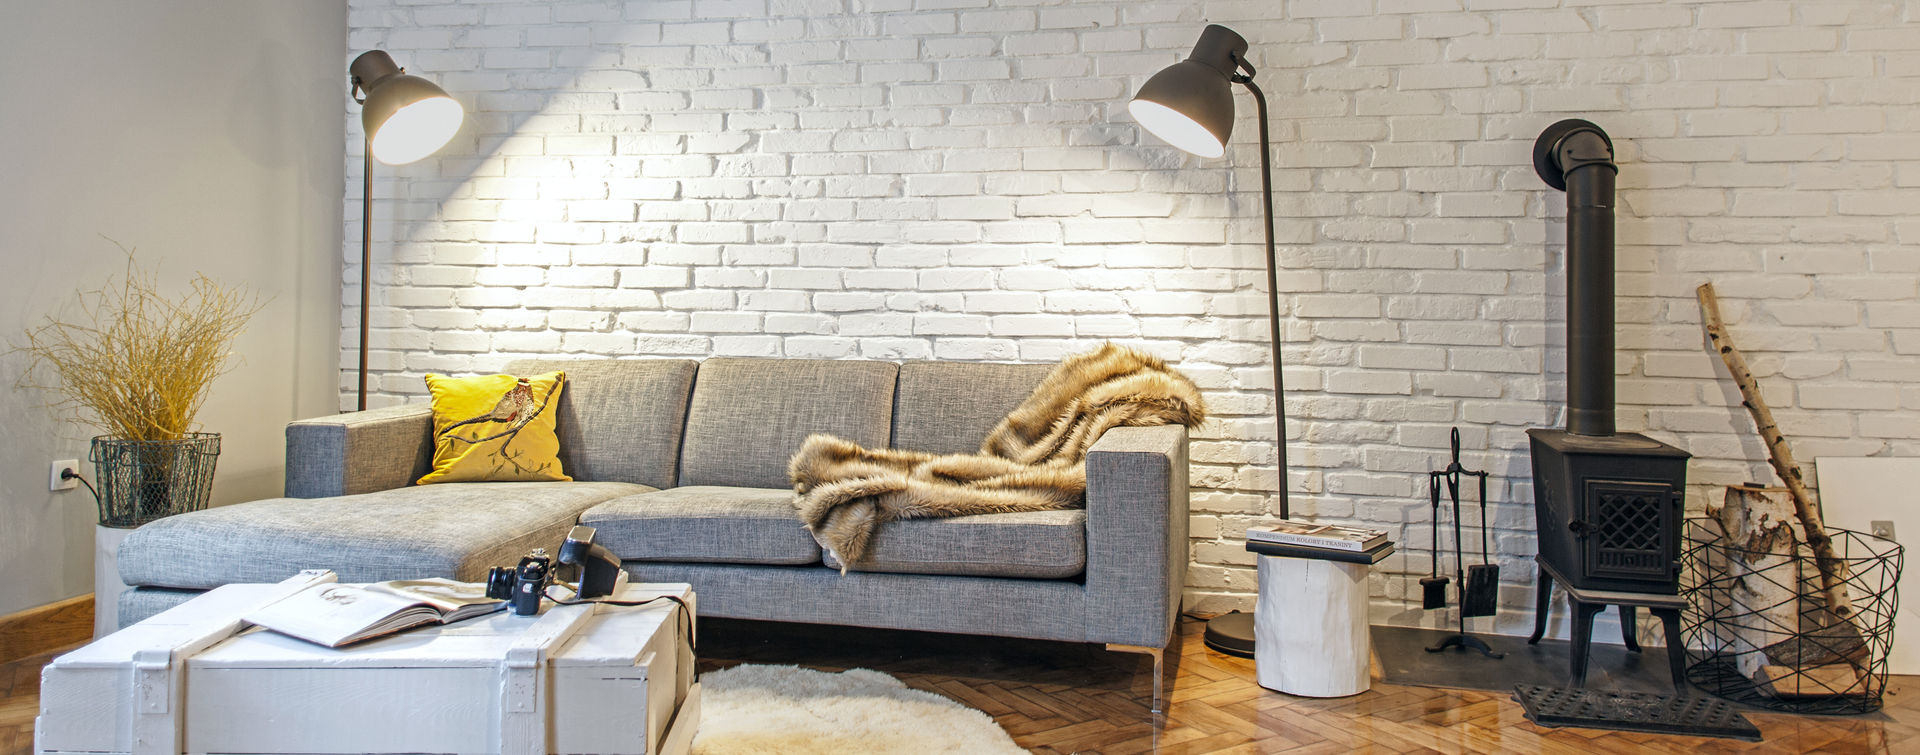 Apartament w Sopocie, DoMilimetra DoMilimetra Salas modernas